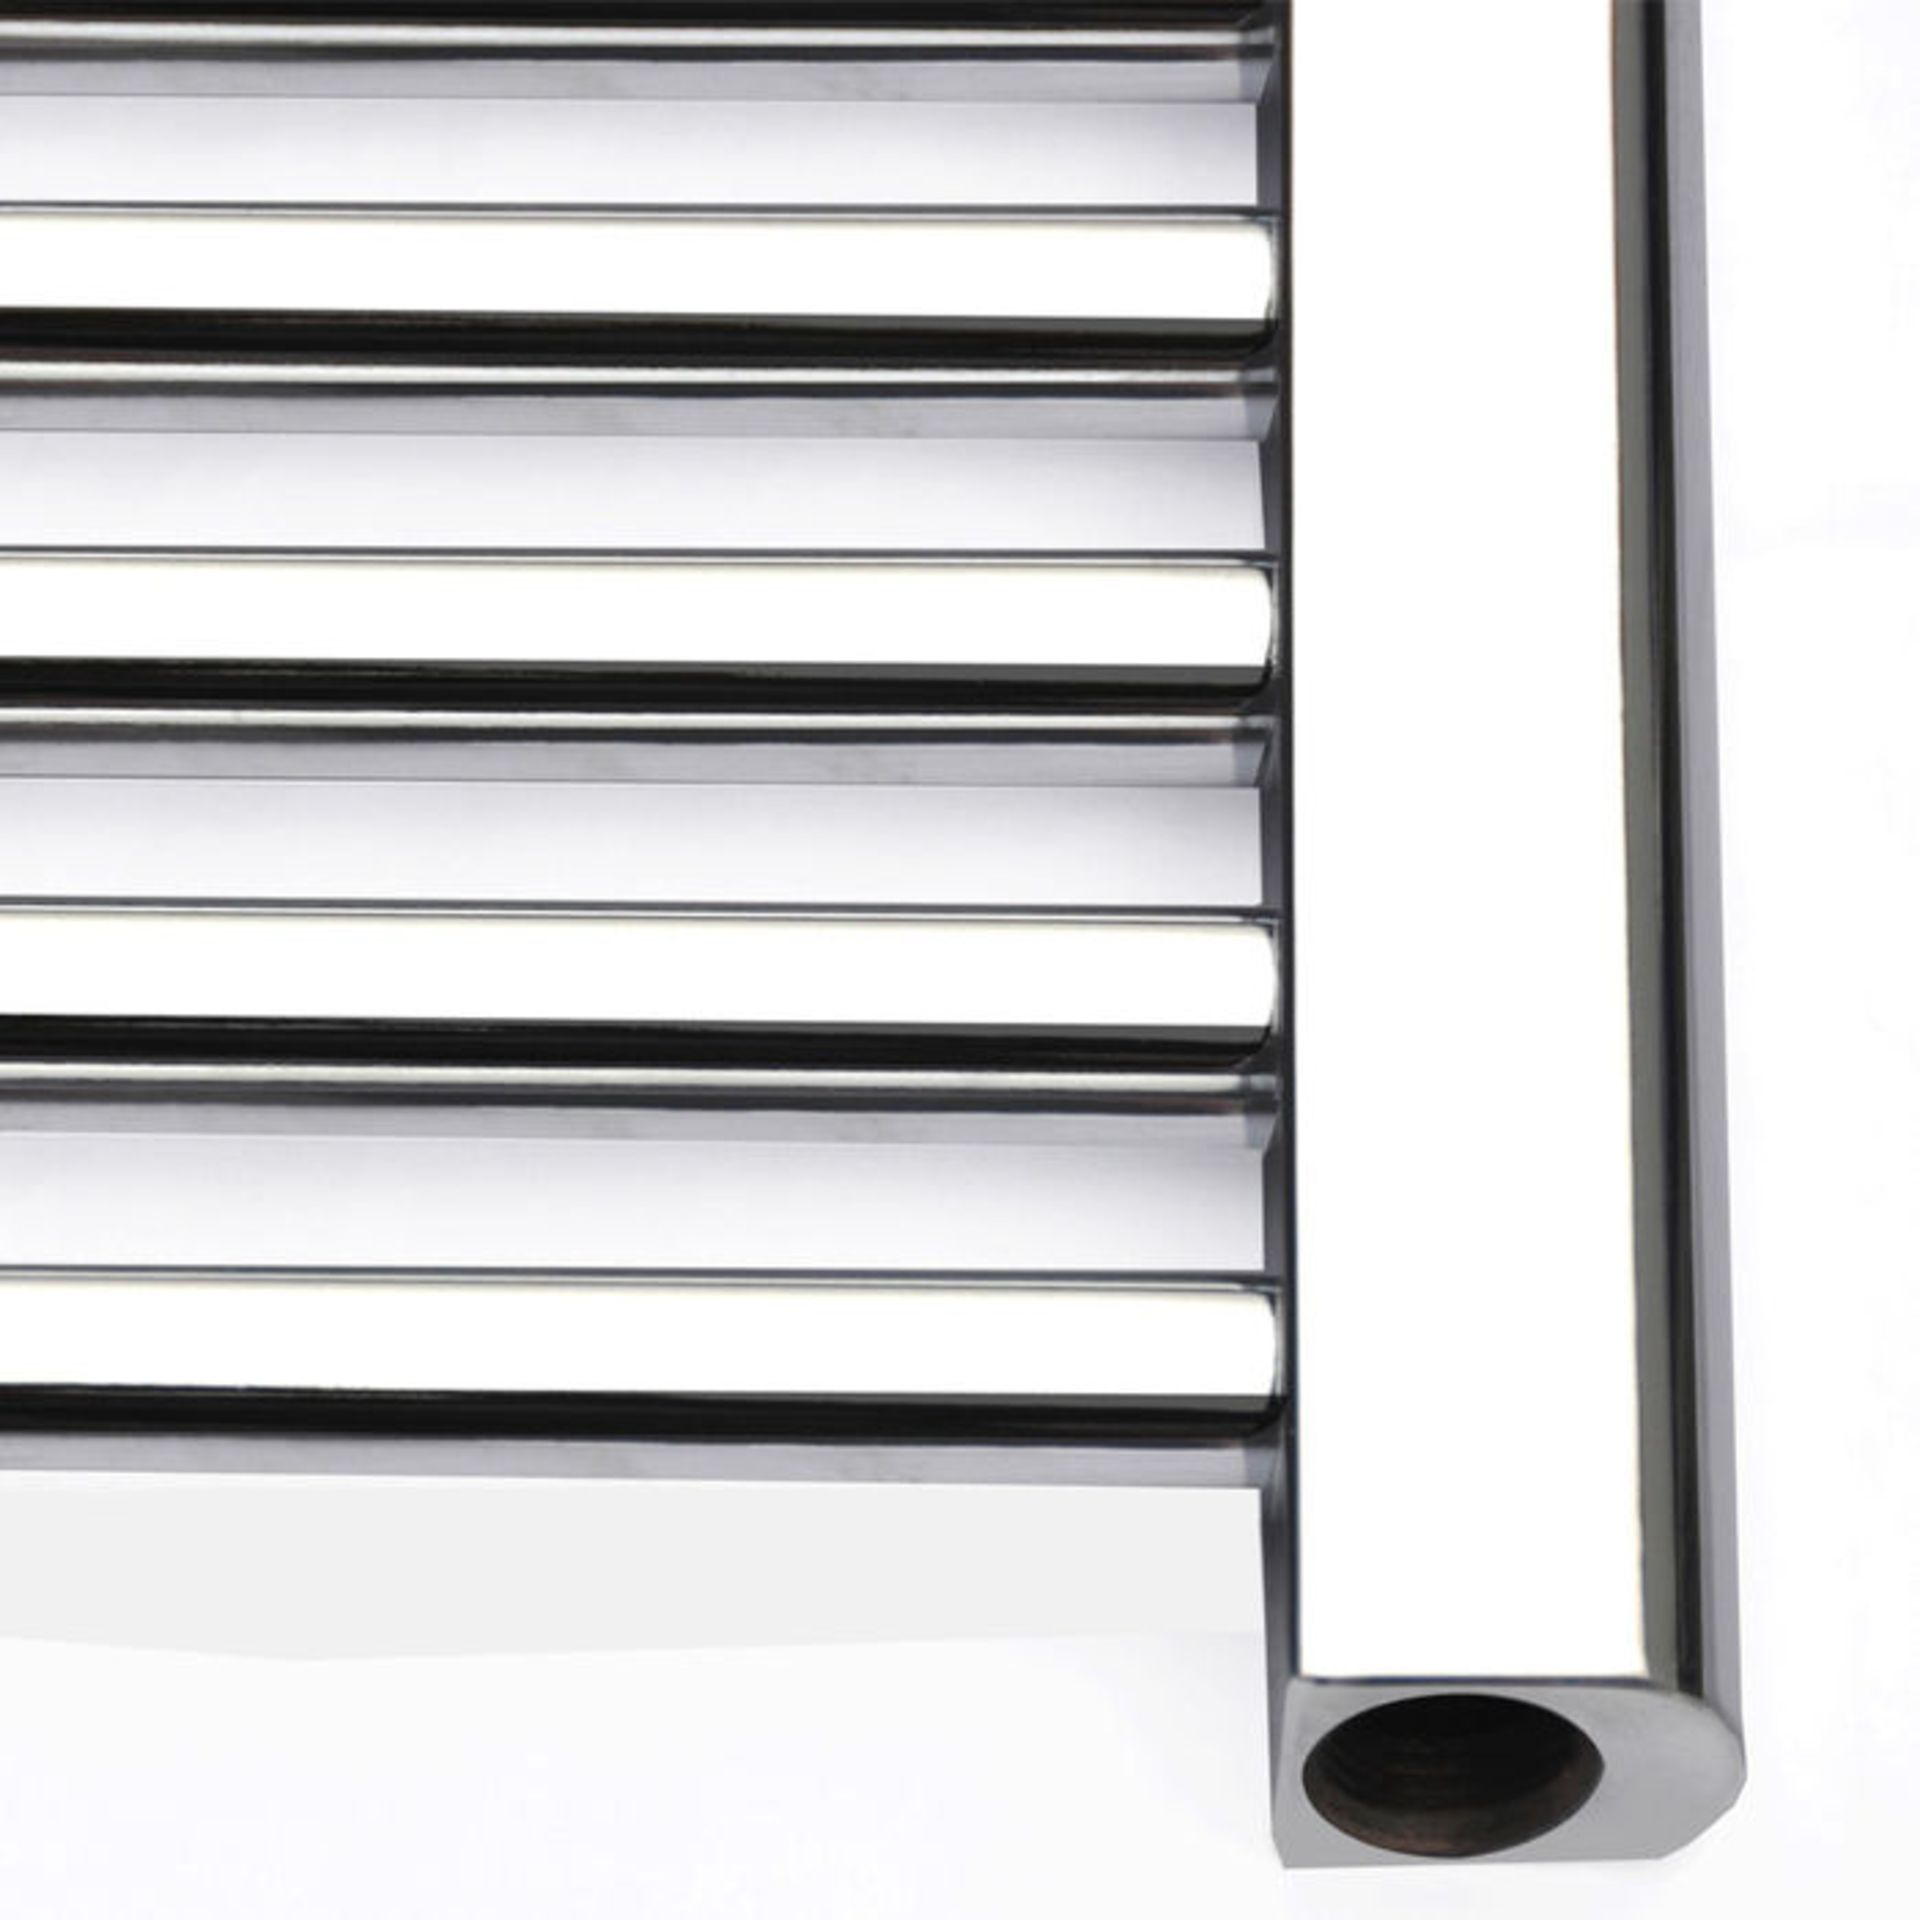 (P54) 1600x600mm -25mm Tubes - Chrome Heated Straight Rail Ladder Towel Radiator. RRP £191.98. - Image 4 of 4